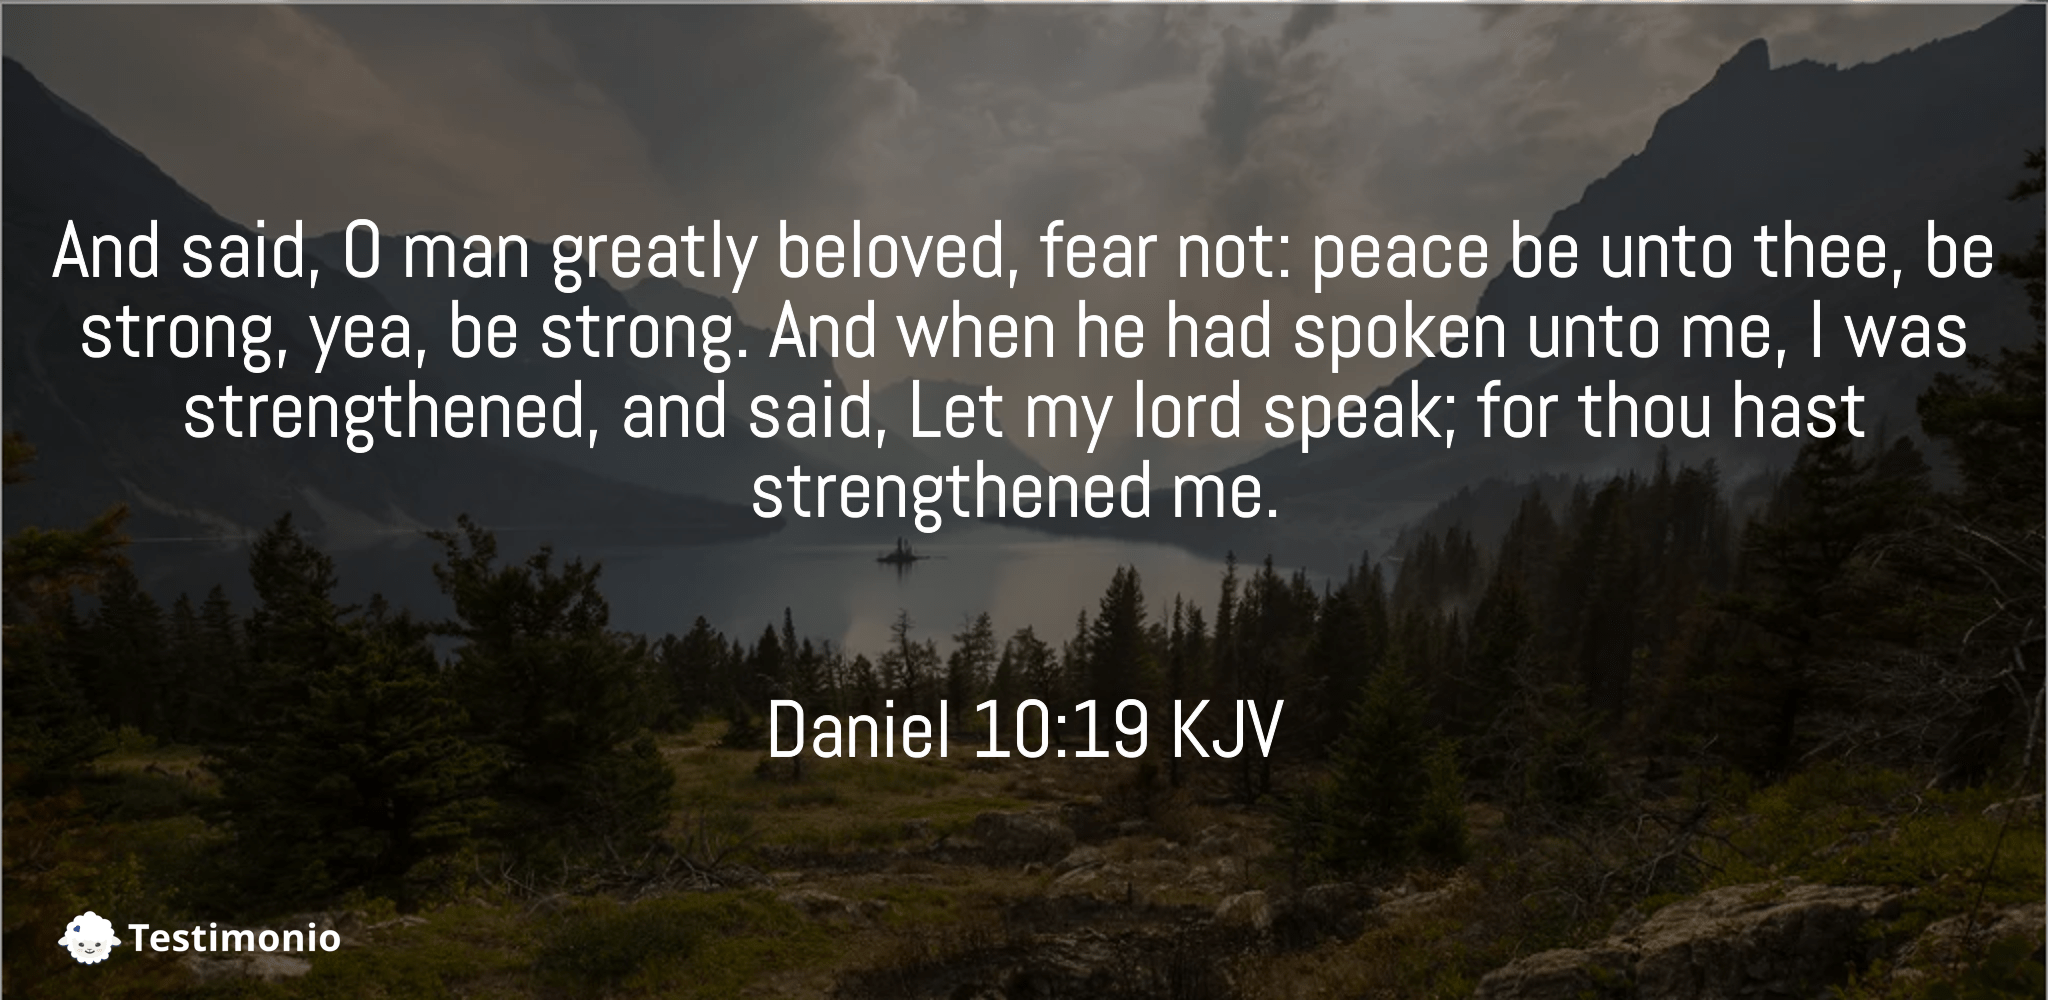 bible verses kjv about strength